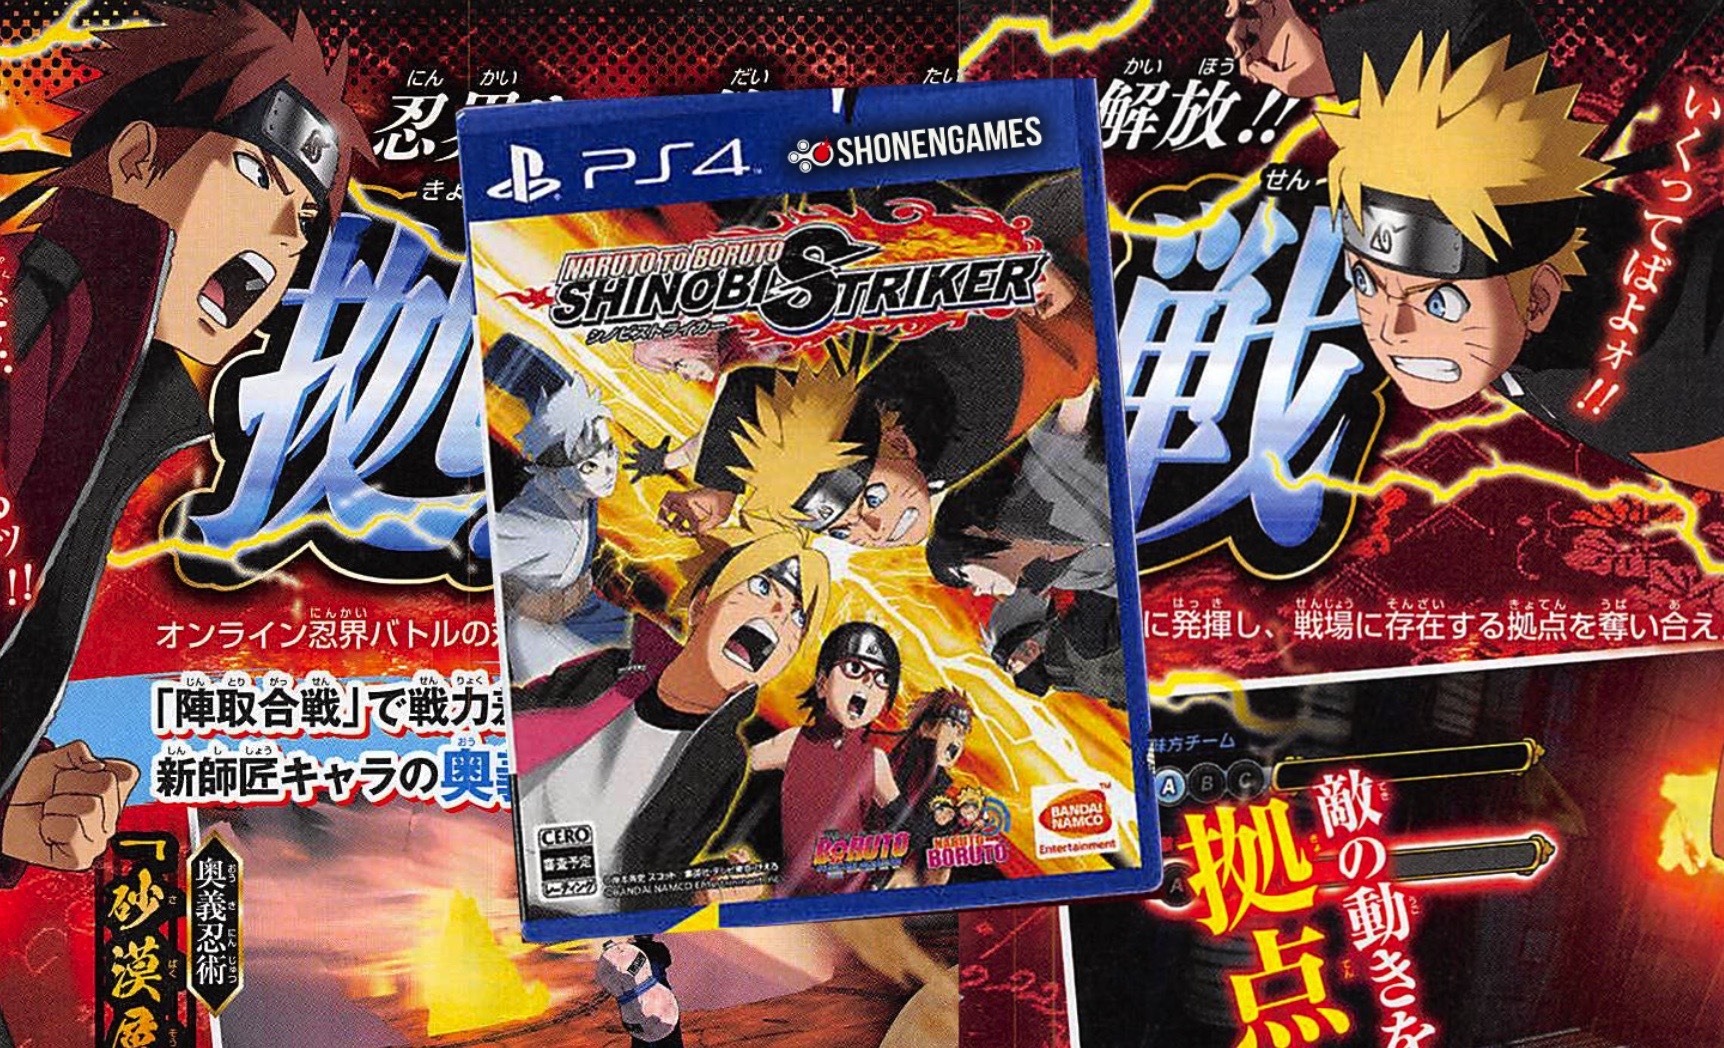 Naruto To Boruto Shinobi Striker Releases August 30 In Japan Here S Its Box Art Siliconera